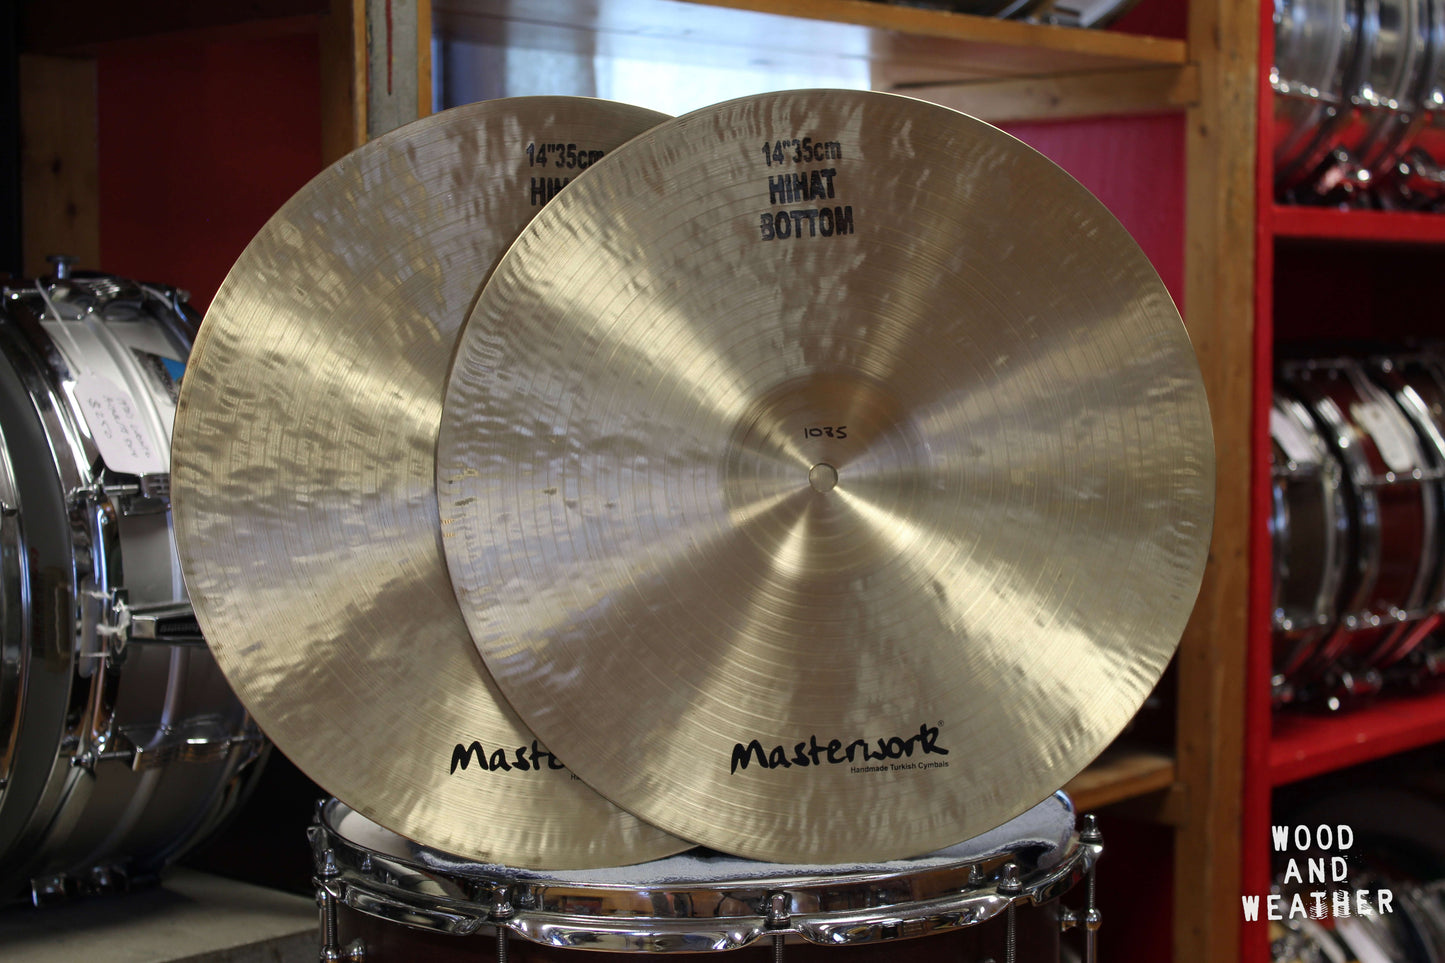 Used Masterwork 14" Hi-Hat Cymbals 870/1085g